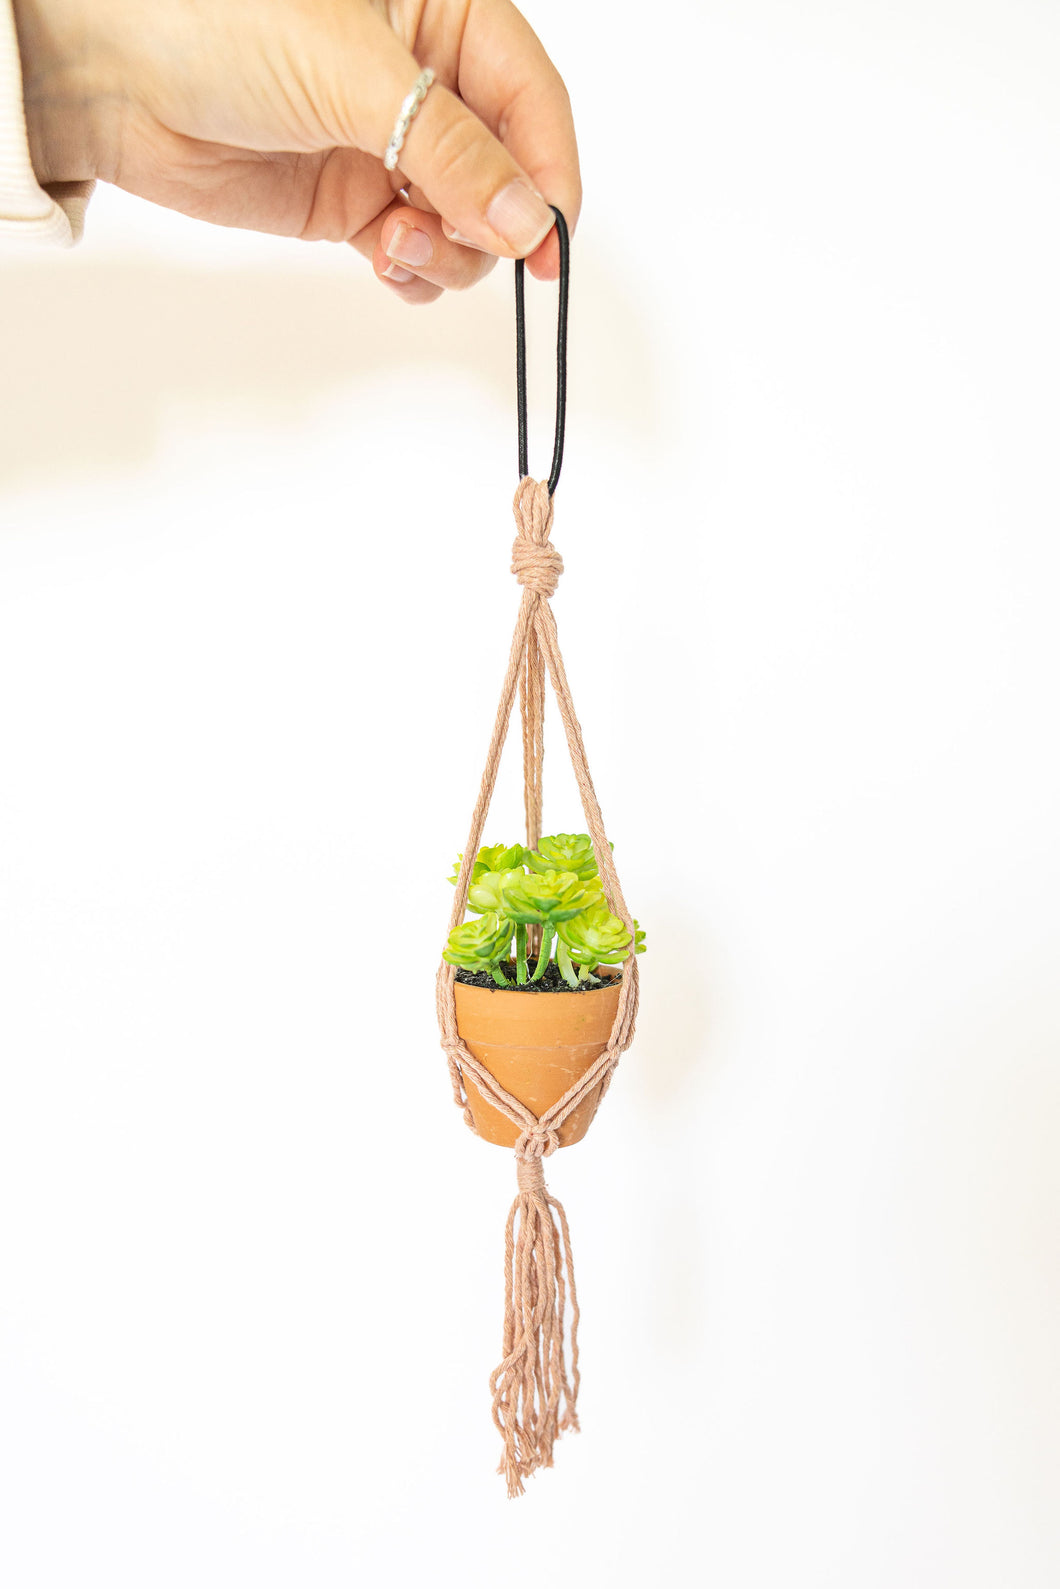 Mini macrame plant hangers for car